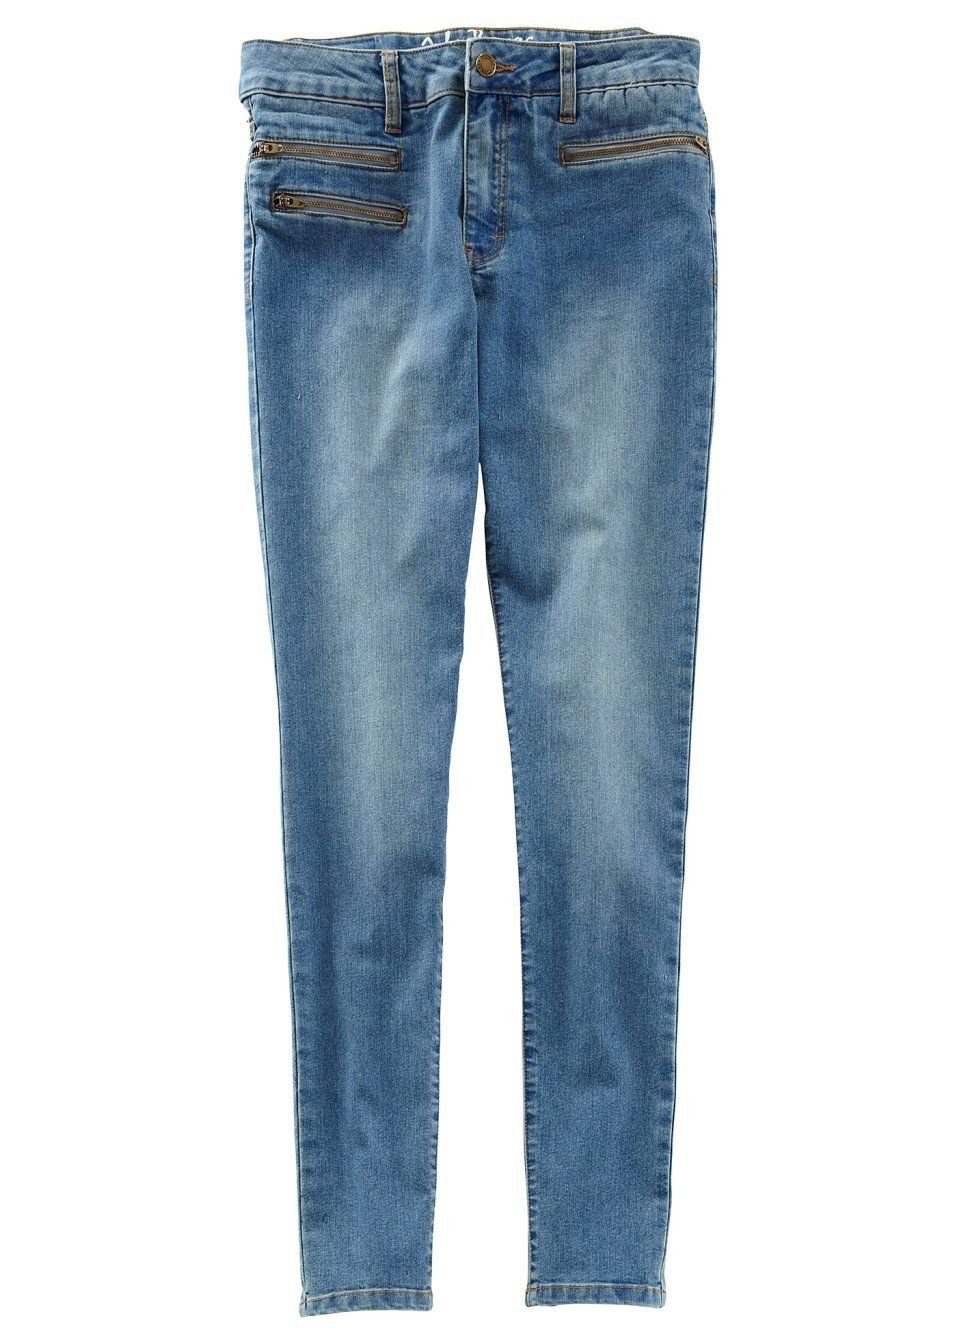 YESET Stretch-Jeans Damen Stretch-Jeans medium Chino 906595 Hose Röhre blue Zipper Gr 36